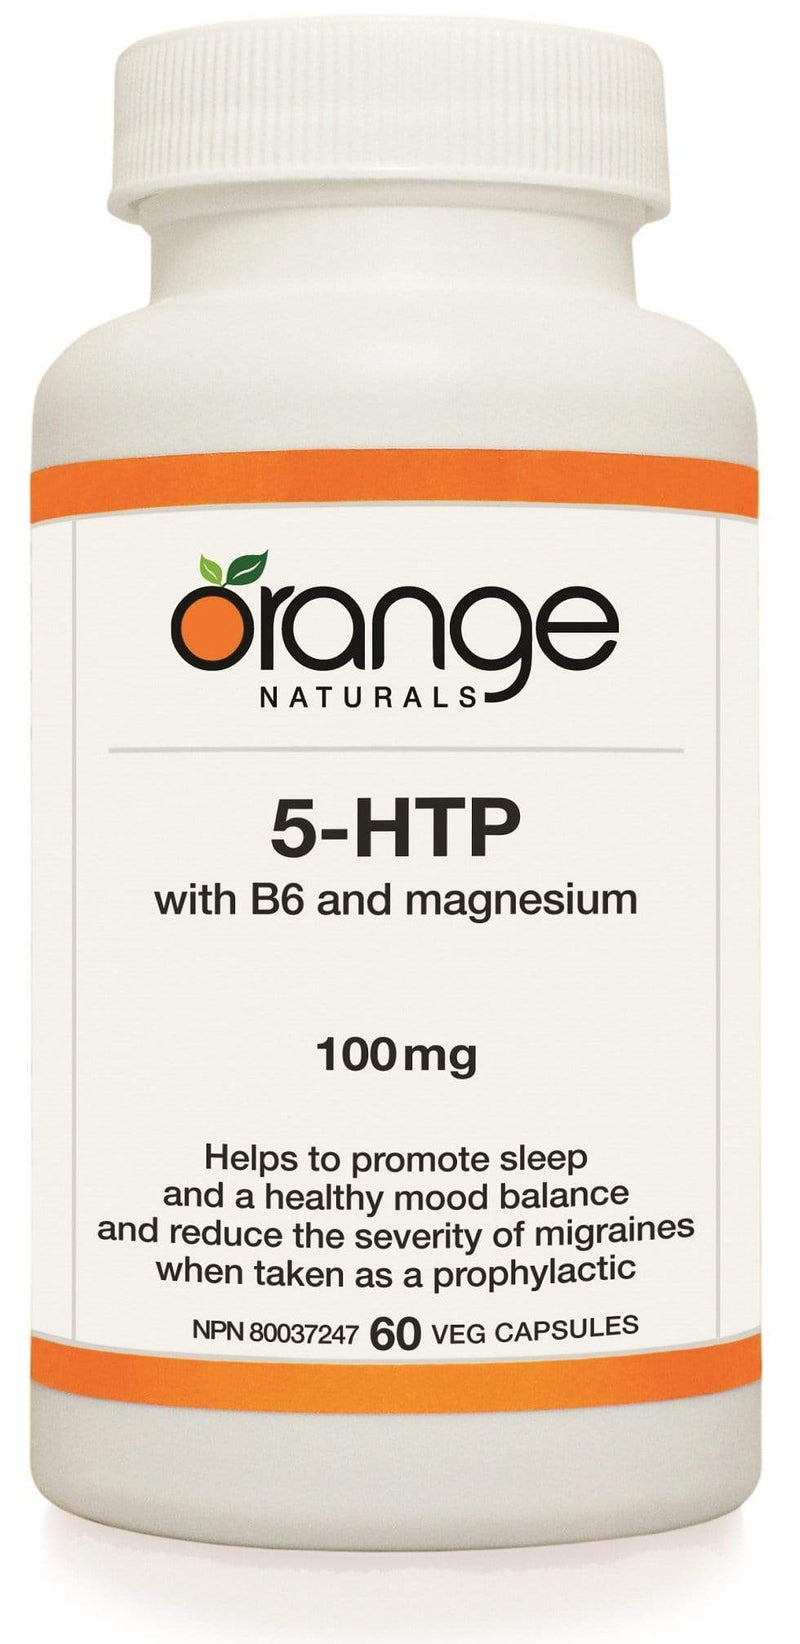 Orange Naturals 5-HTP 100mg with B6 and Magnesium